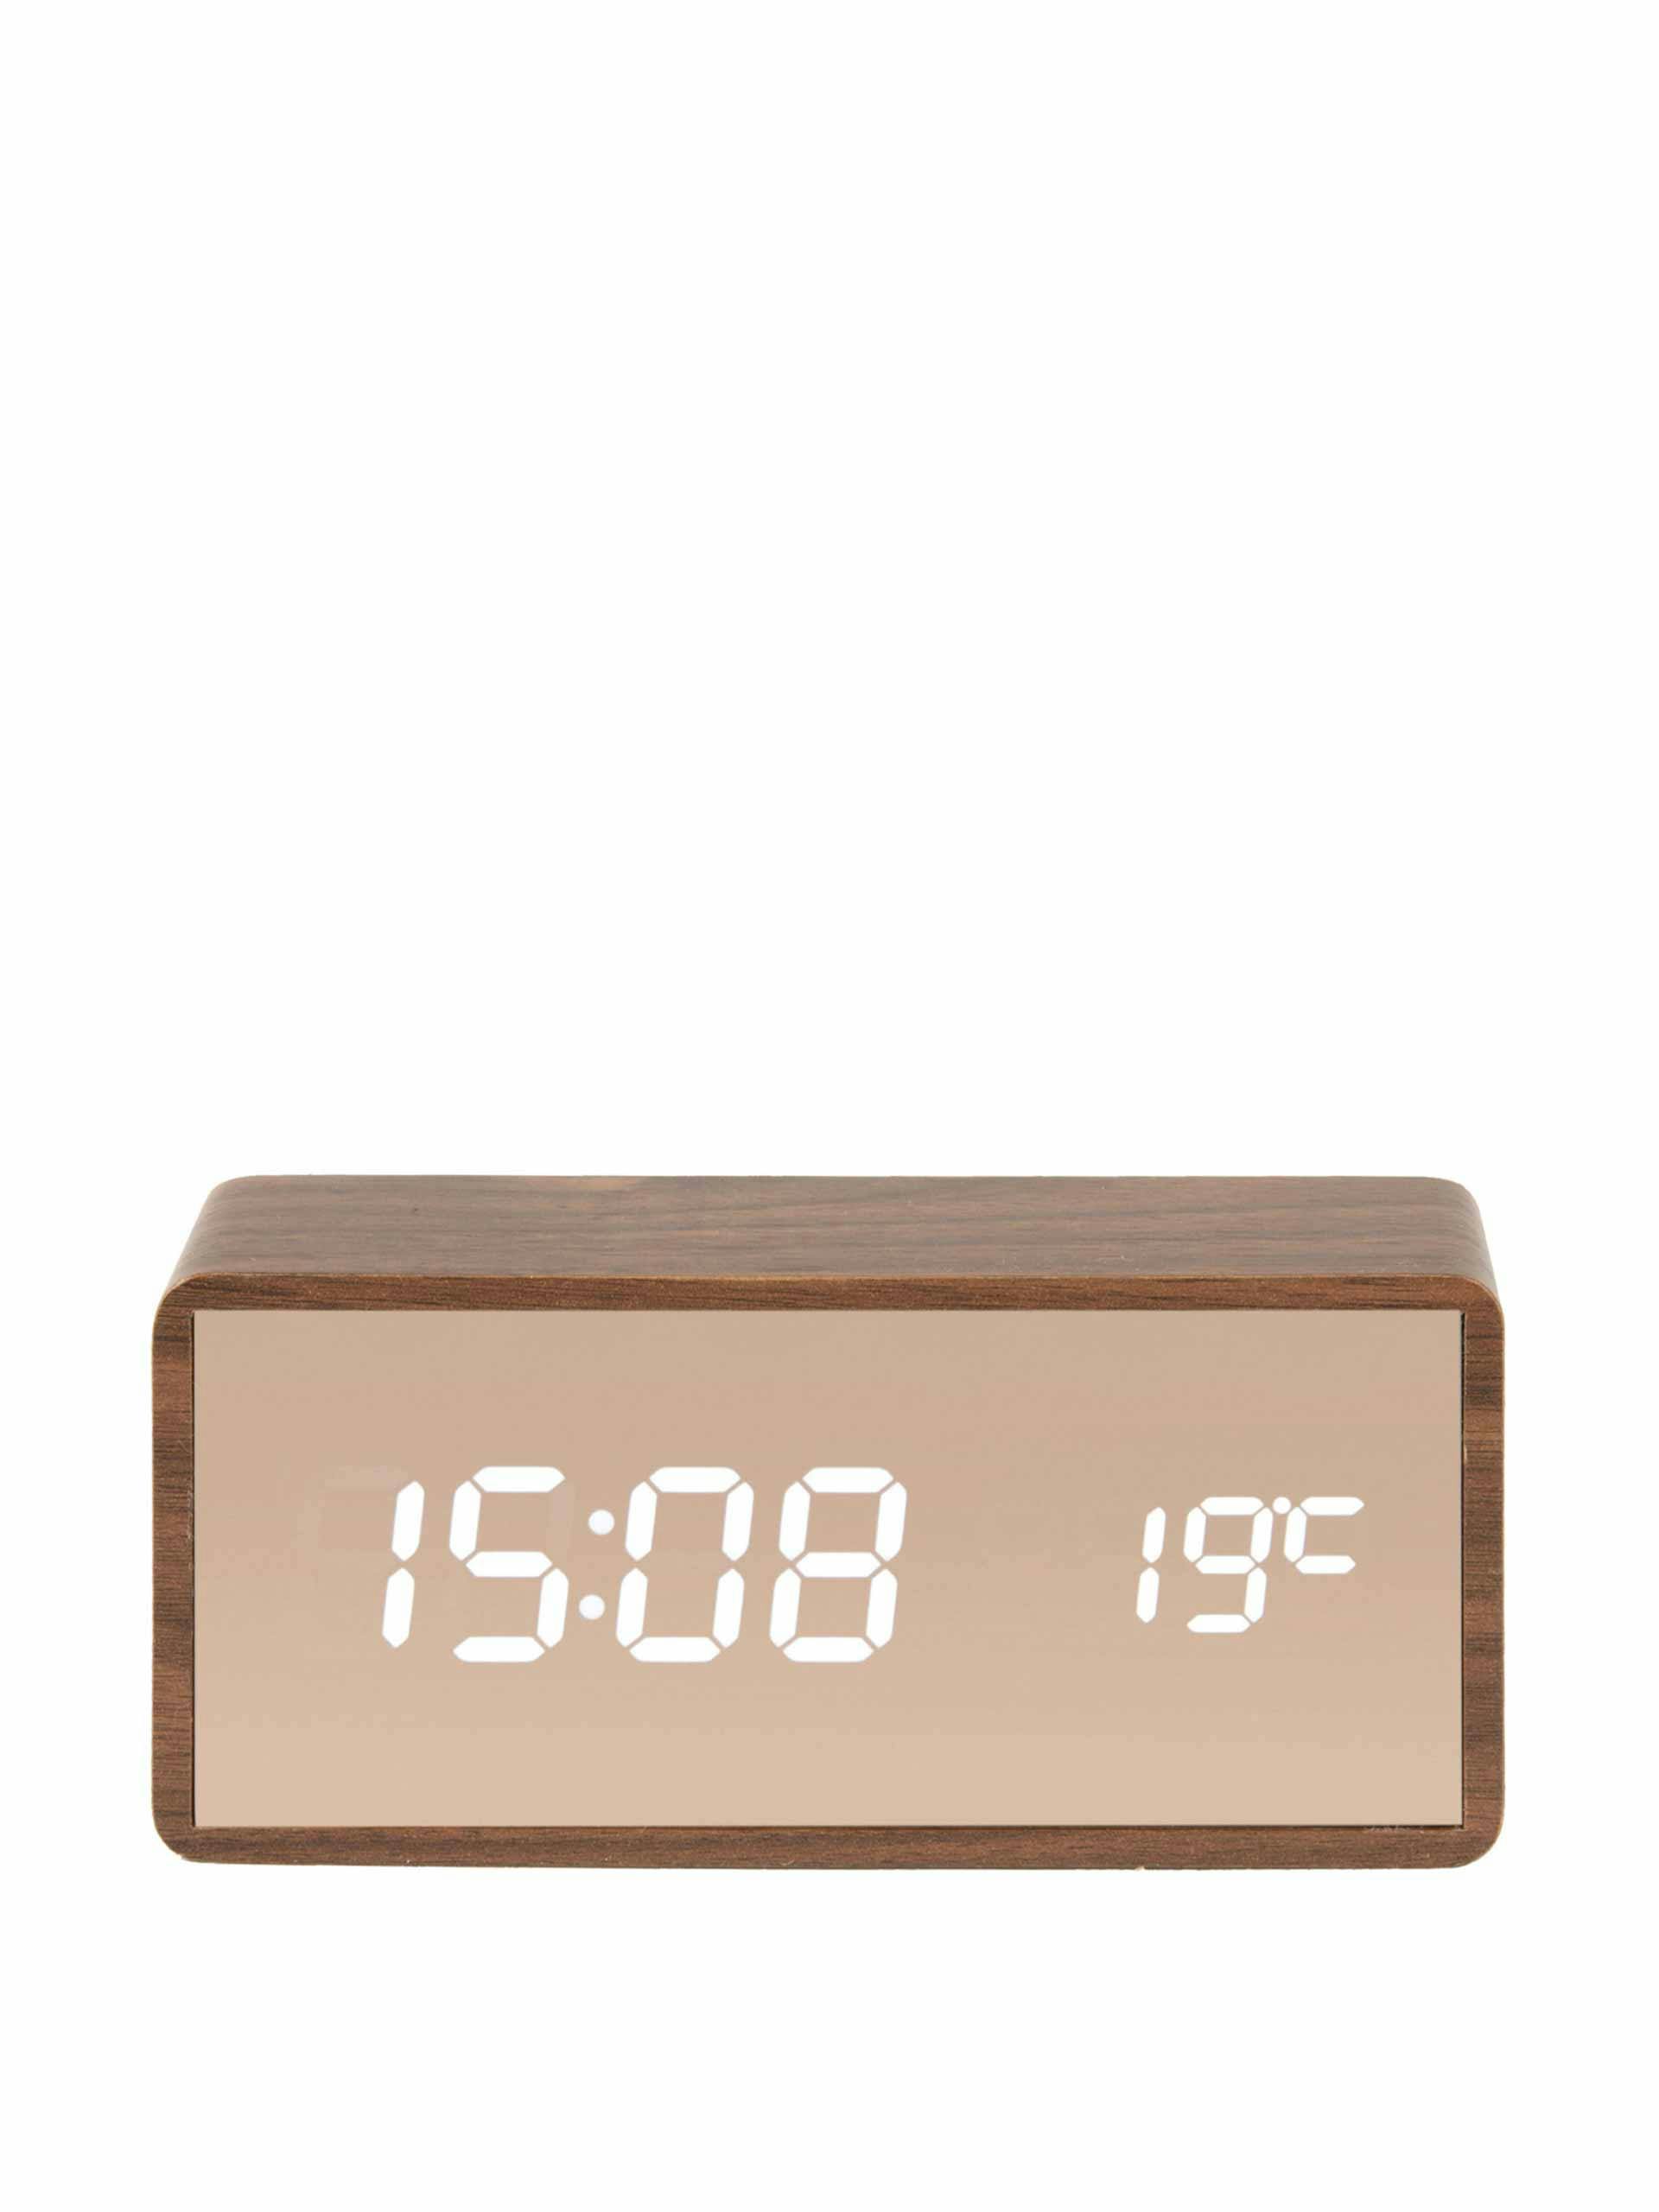 Wooden LED alarm clock